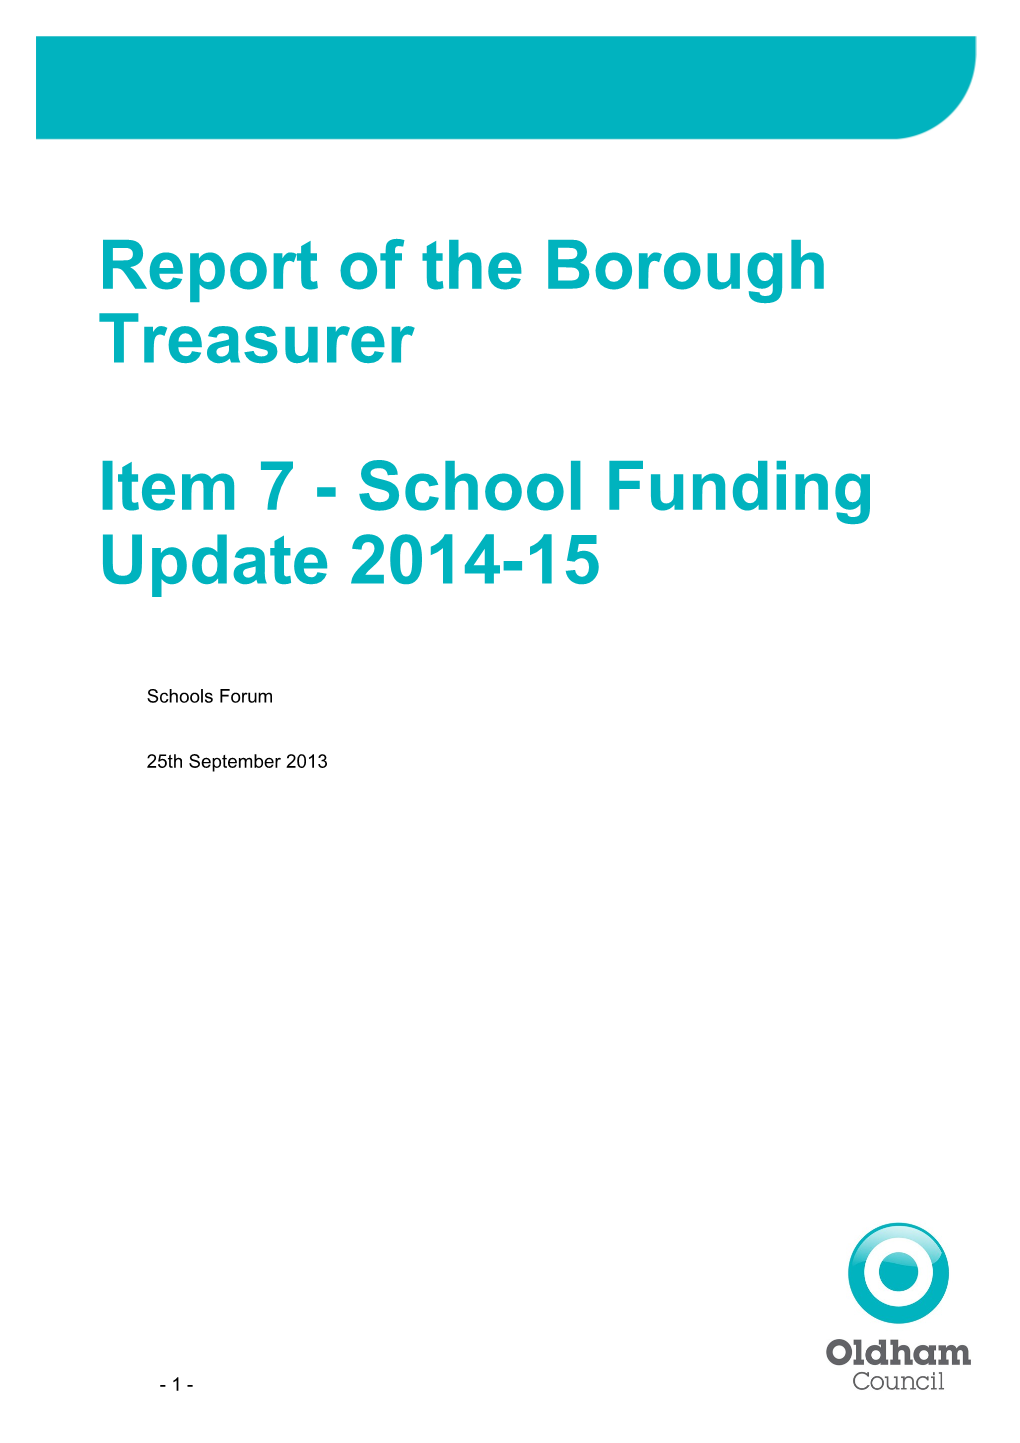 Report of the Borough Treasurer